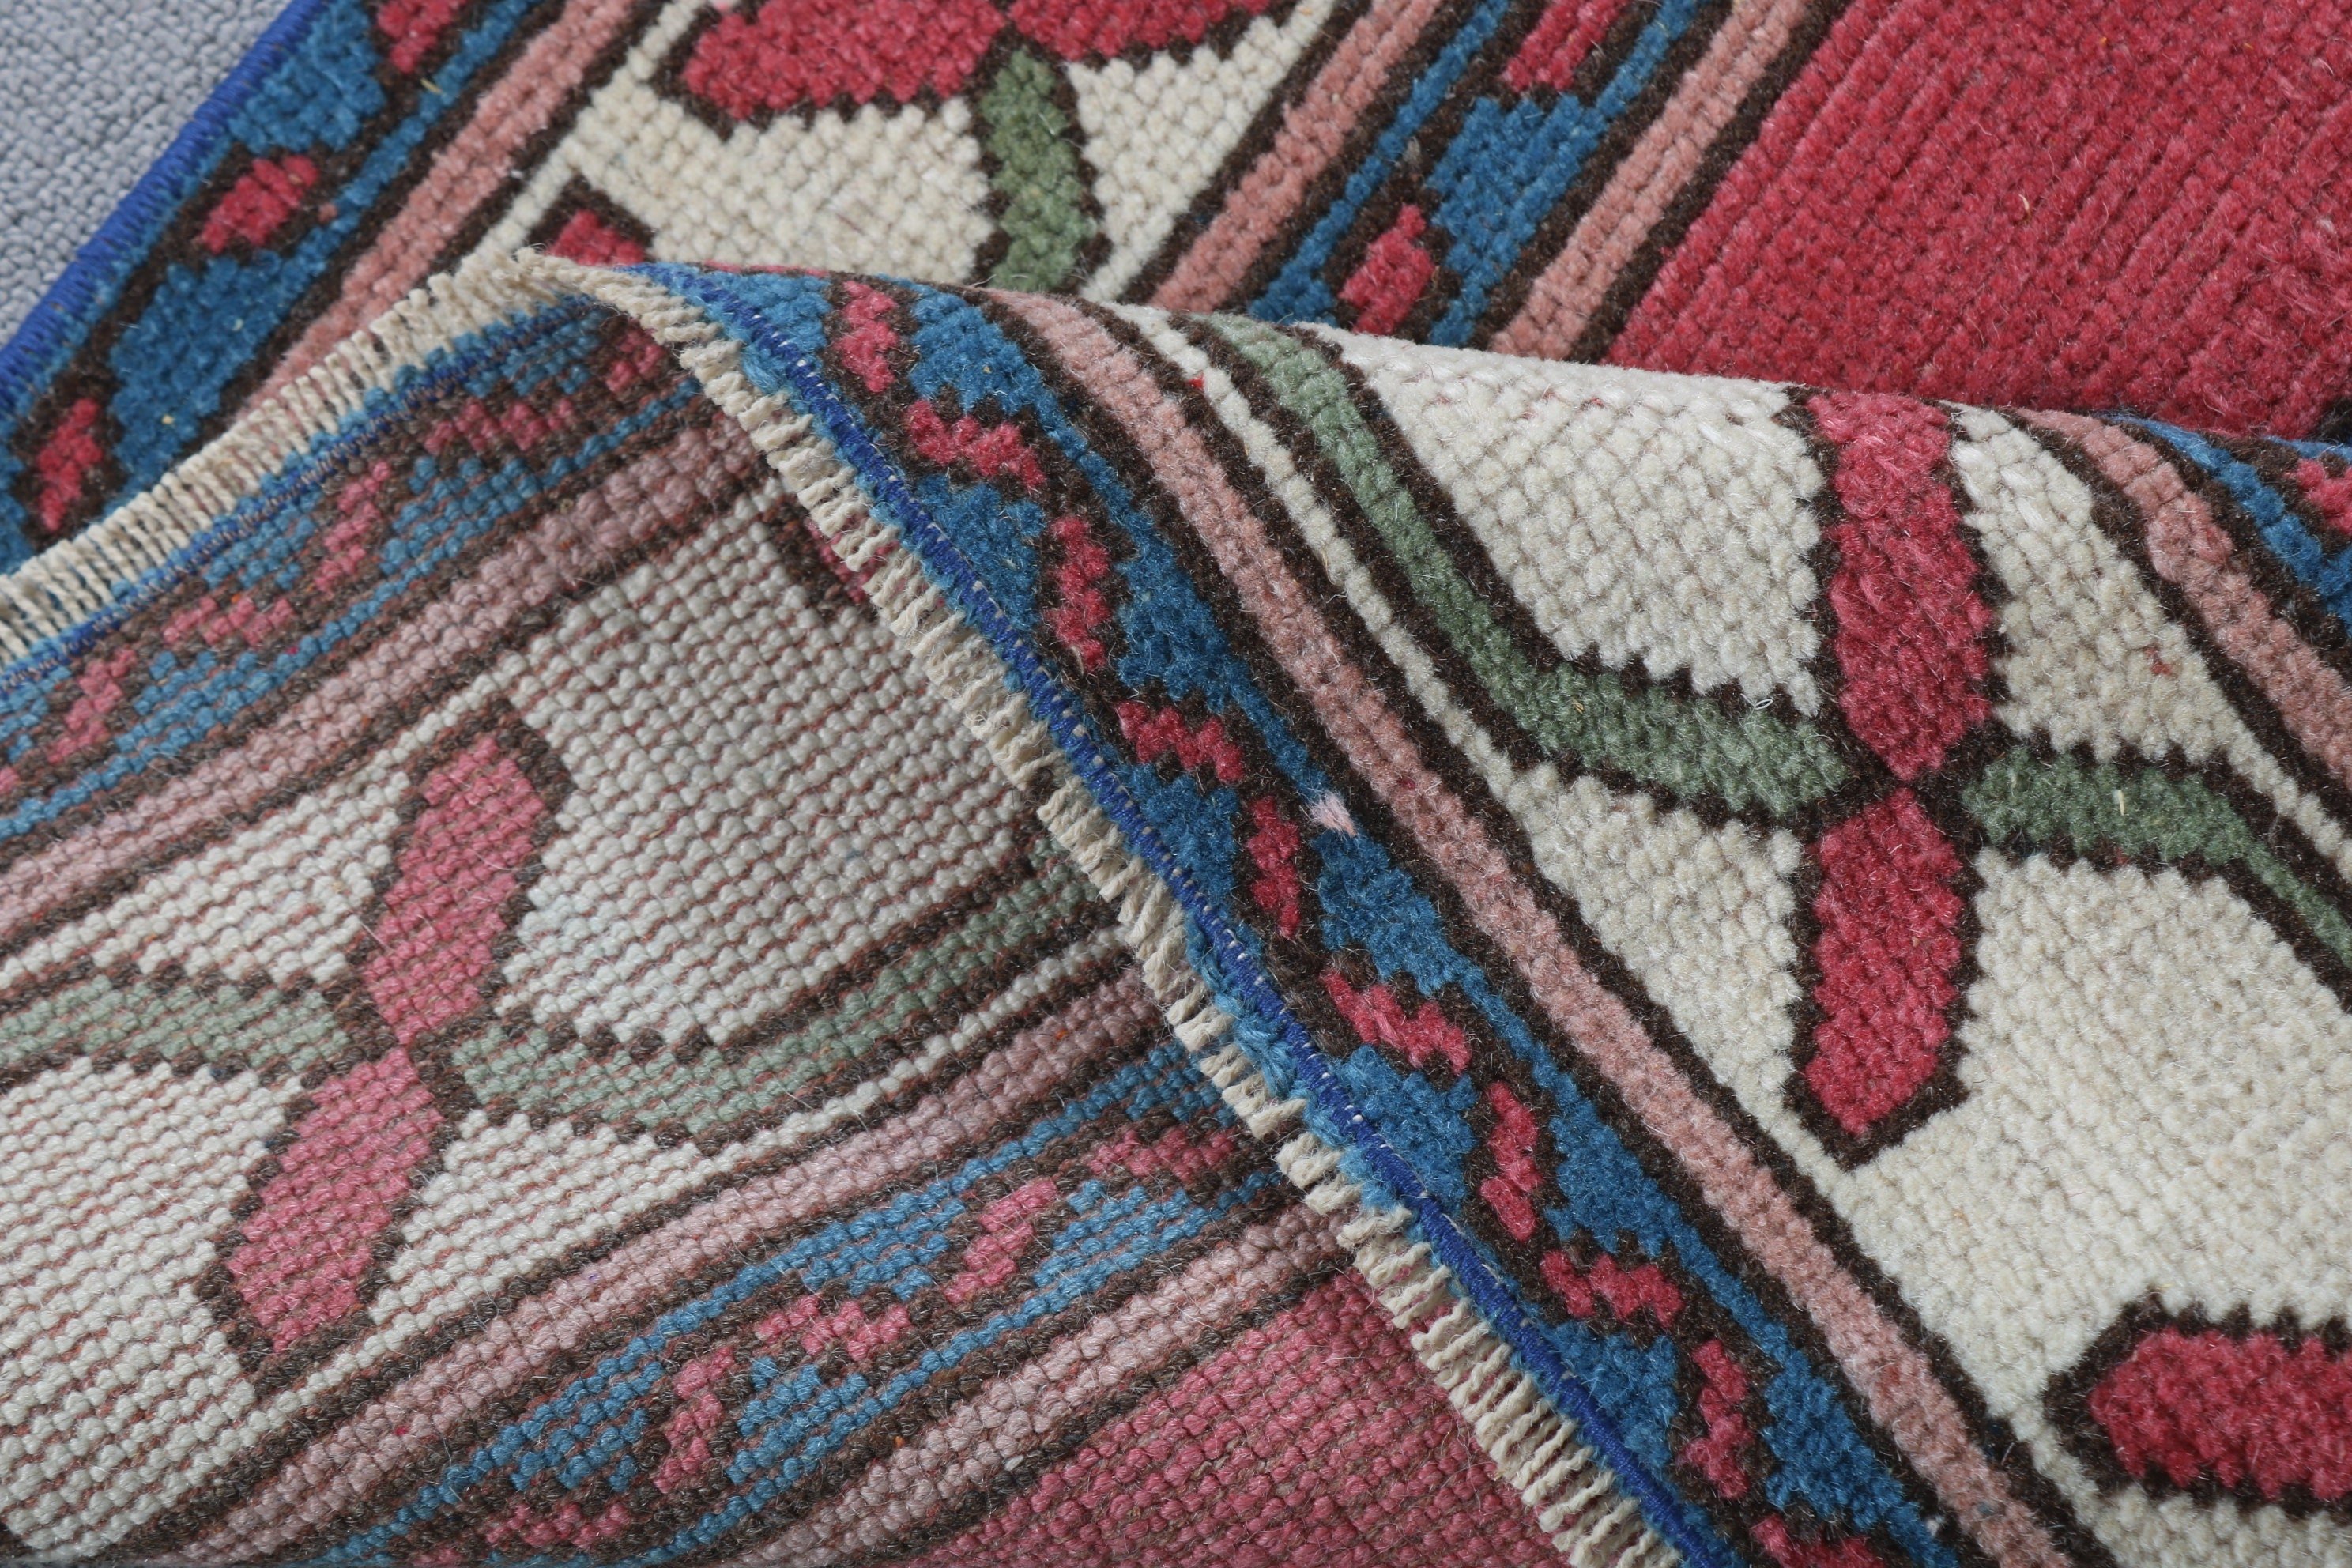 Floor Rugs, Outdoor Rug, Turkish Rugs, Pink  2.7x4.1 ft Small Rug, Home Decor Rug, Door Mat Rugs, Kitchen Rug, Vintage Rugs